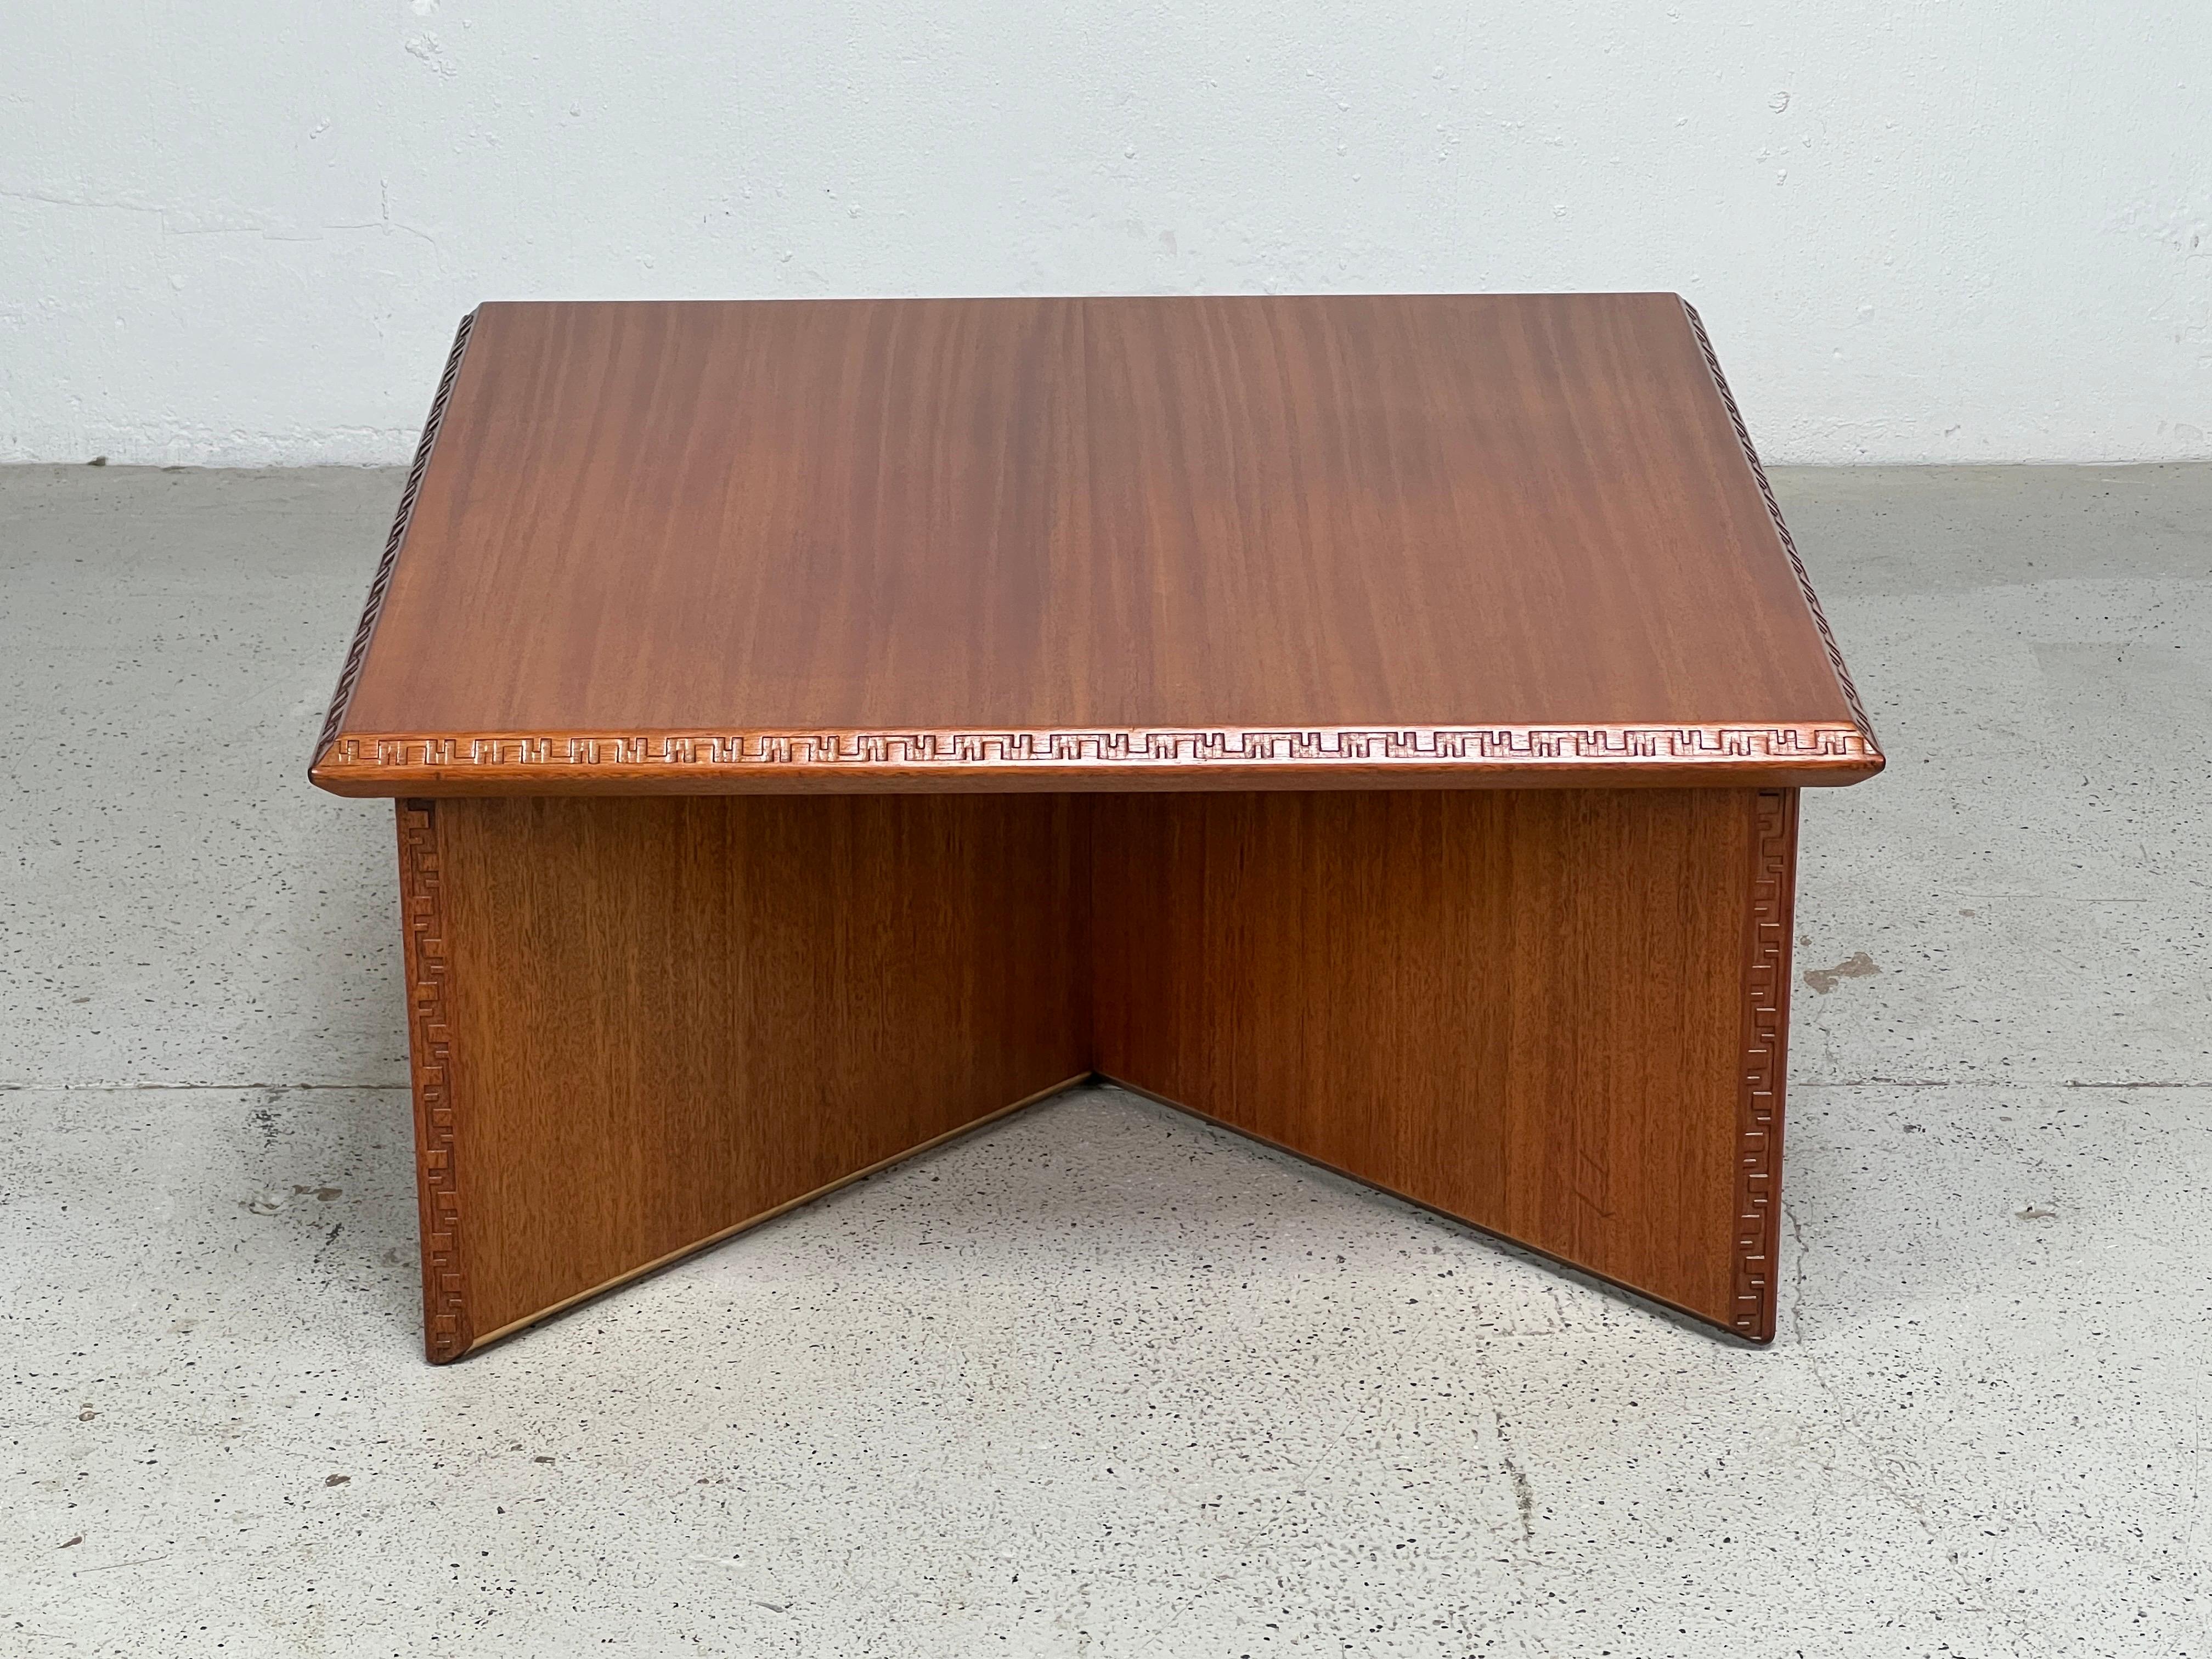 A mahogany coffee table designed by Frank Lloyd Wright for Henredon.